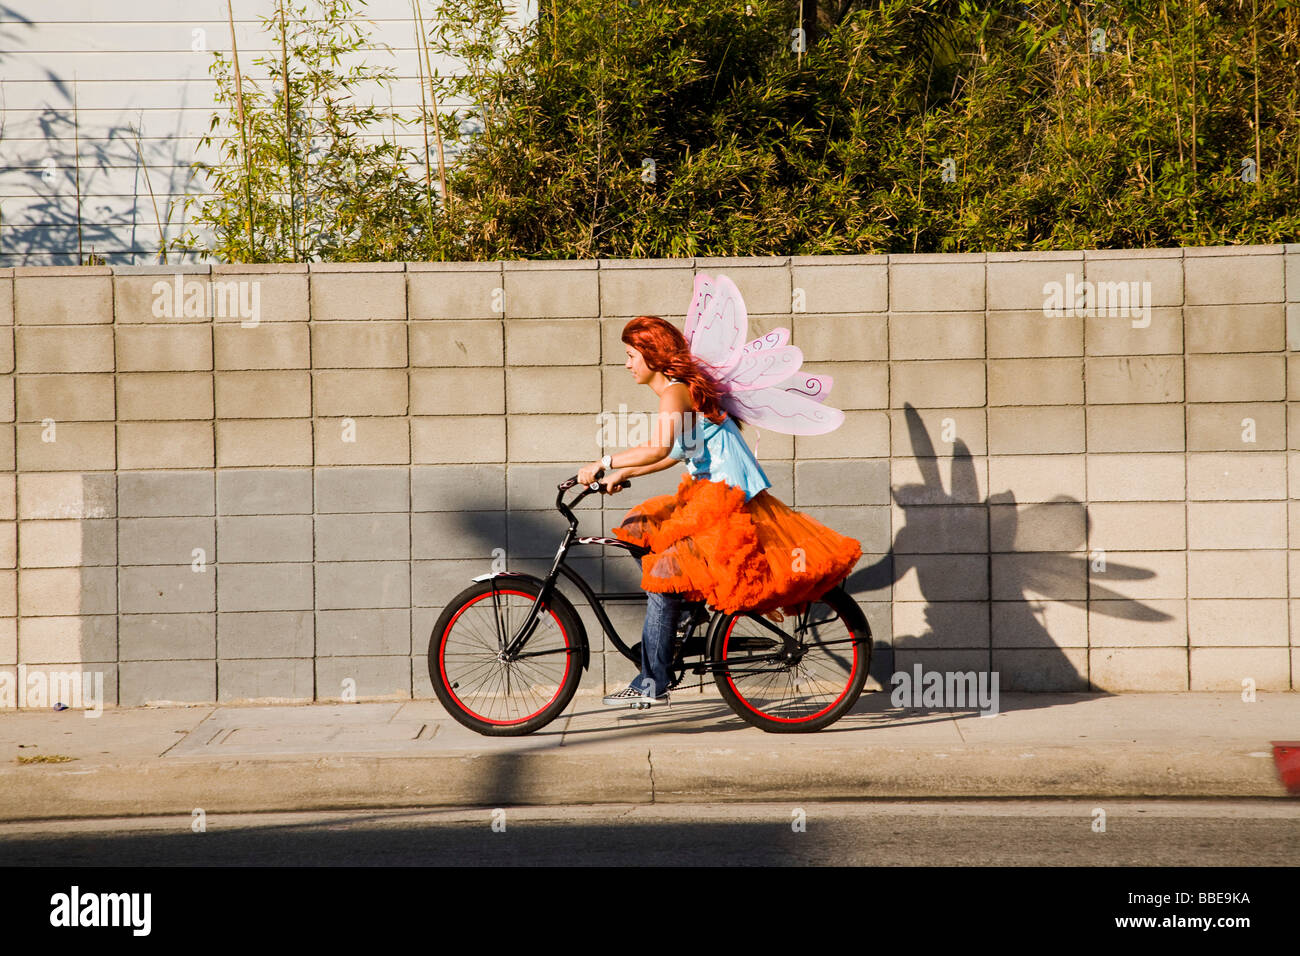 Bike Rider dans un costume avec des ailes d'anges Venice Beach Los Angeles County California United States of America Banque D'Images